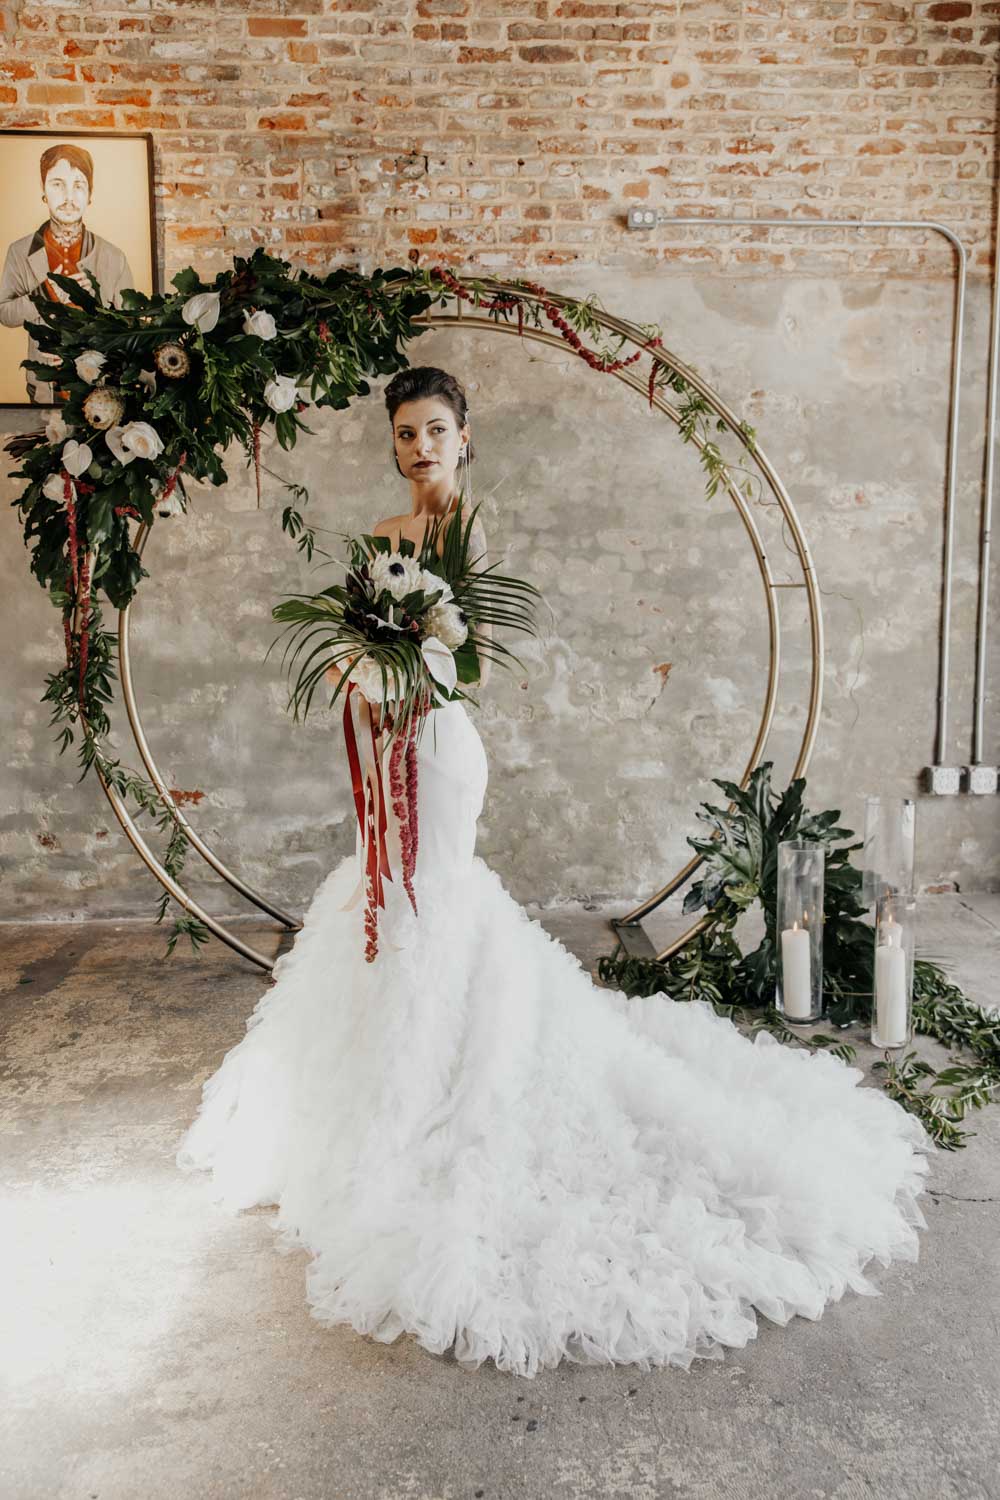 New Orleans industrial wedding inspiration on Equally Wed, an LGBTQ+ wedding magazine